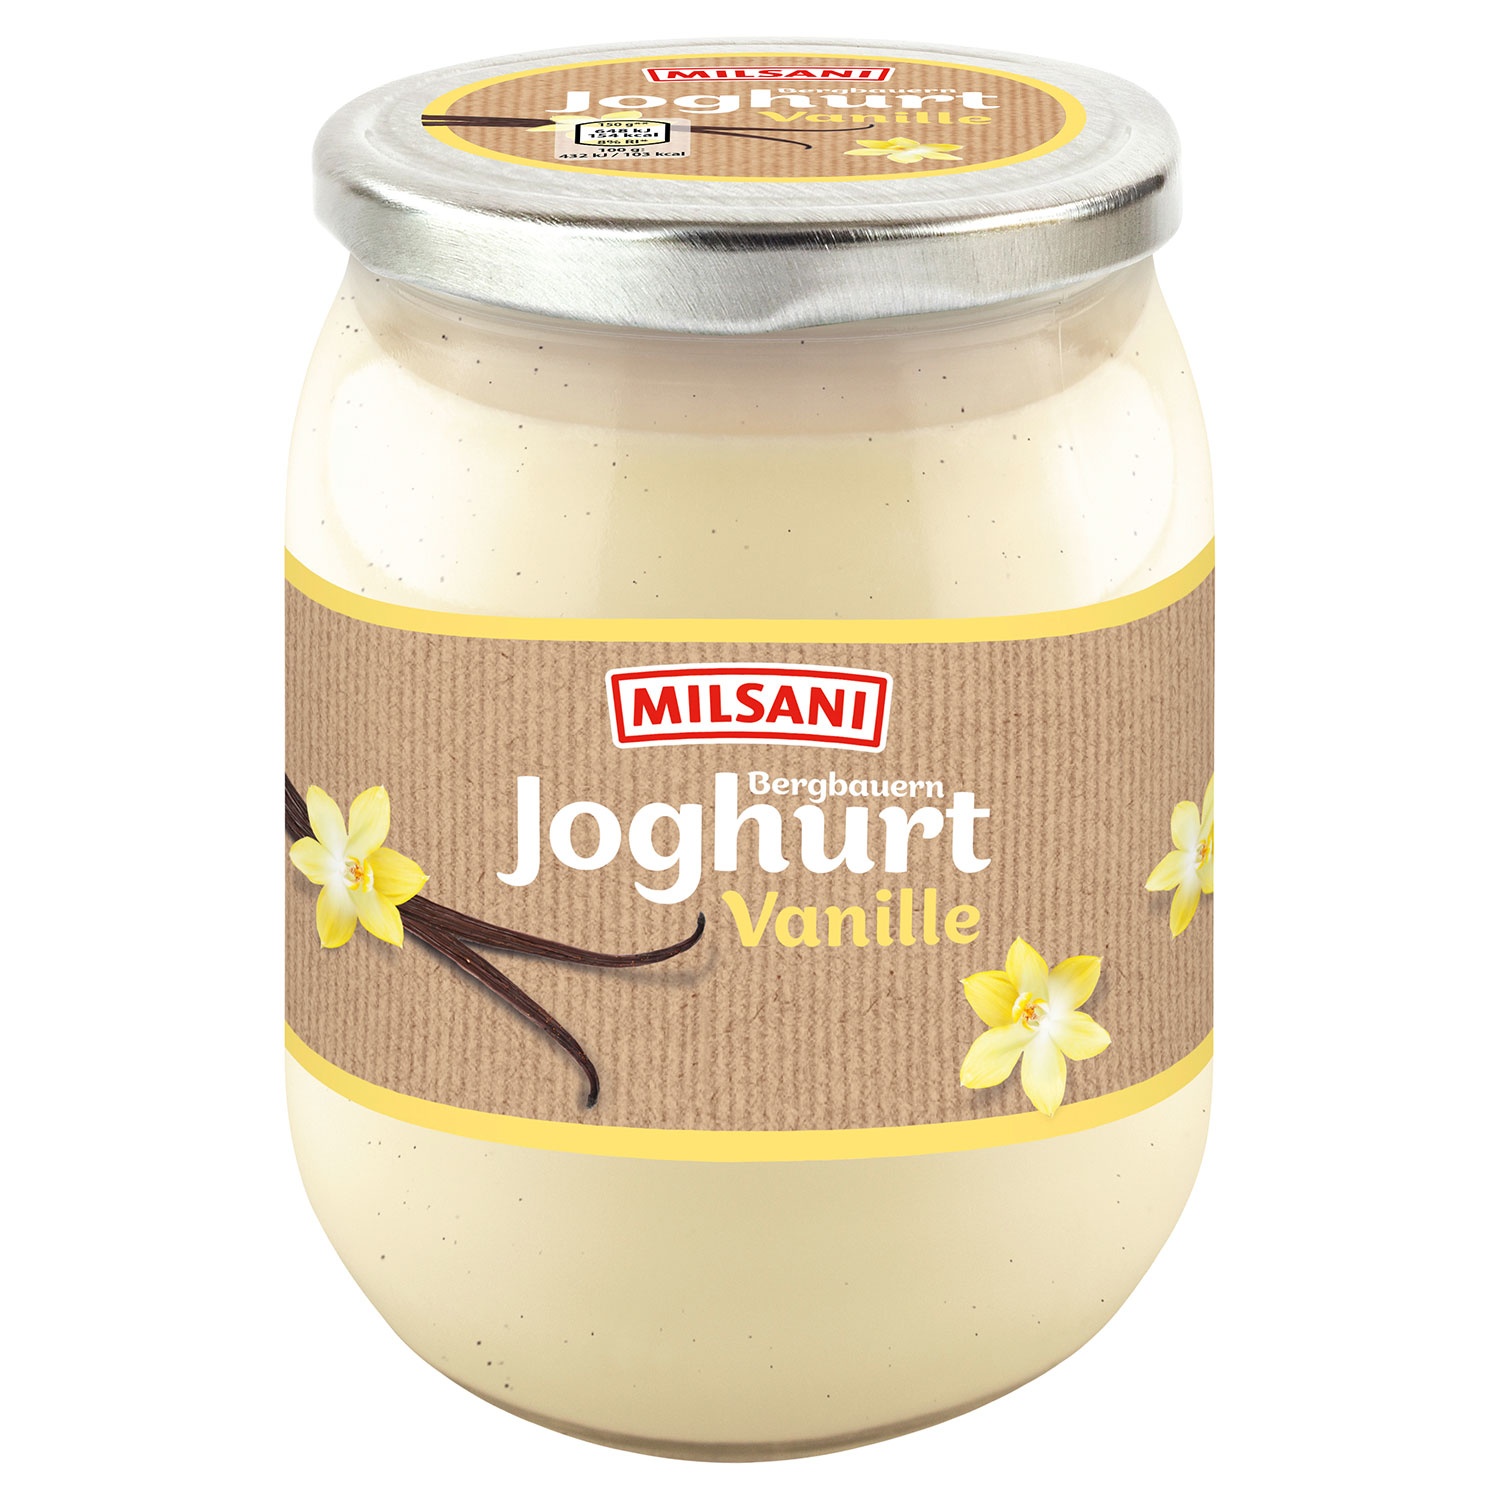 MILSANI Bergbauern-Joghurt 0,45 kg, Vanille